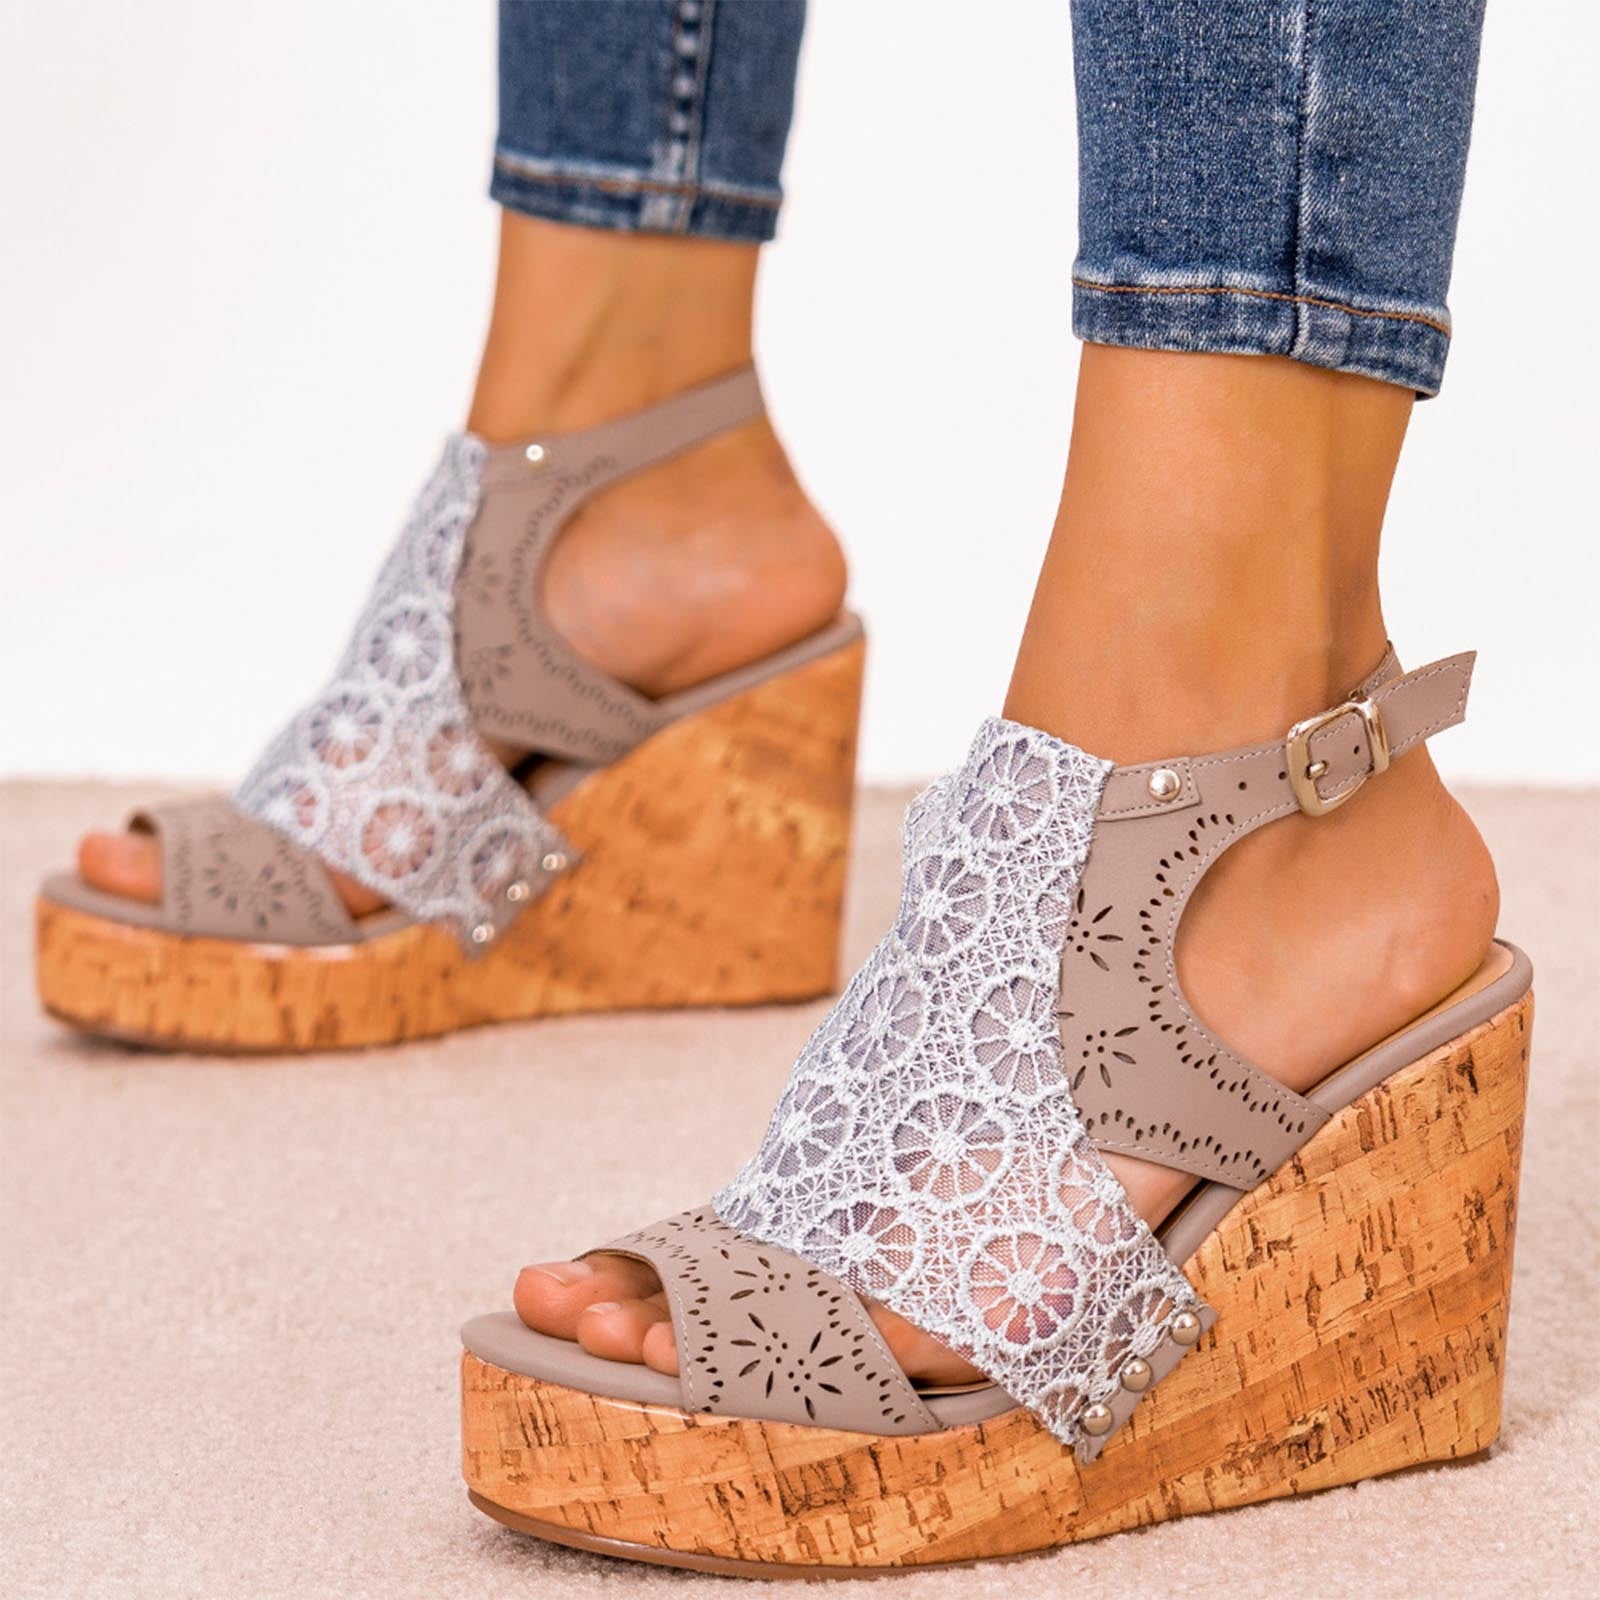 New Womens Sandals Wedge Shoes Low Heels Flip Flops Thong BABY-102 